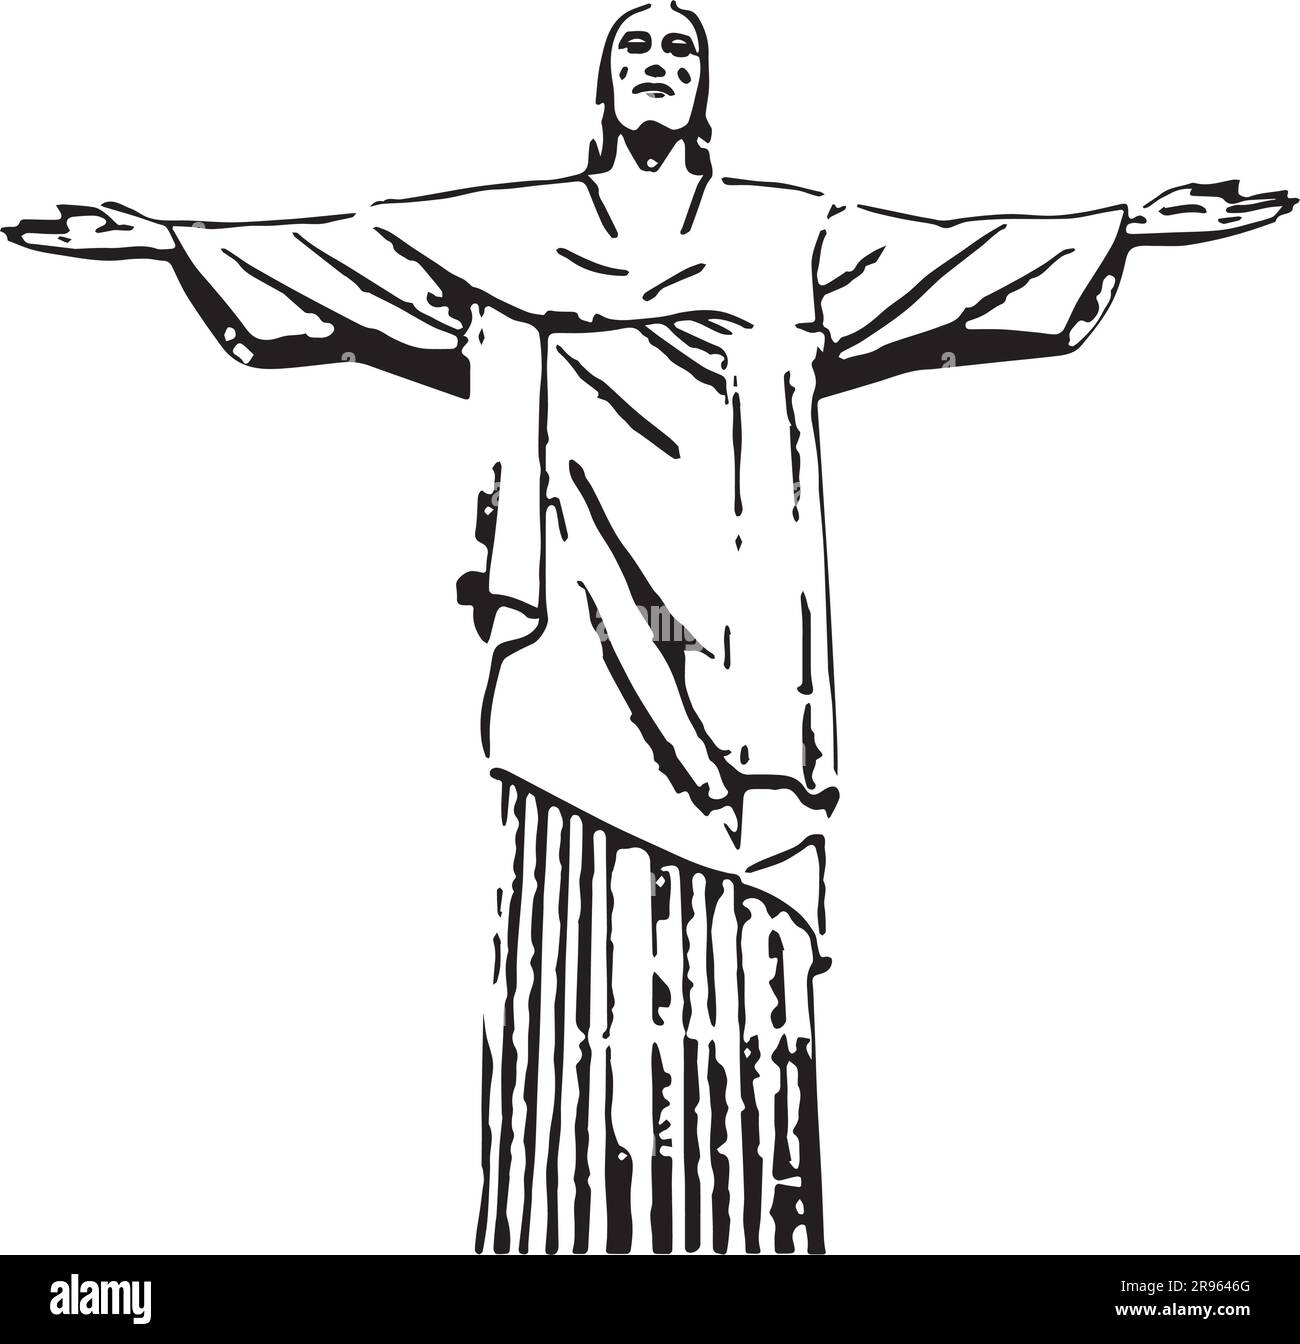 Black and White Sketch of Christ the Redeemer, Rio de Janeiro - vector stencil style Stock Vector